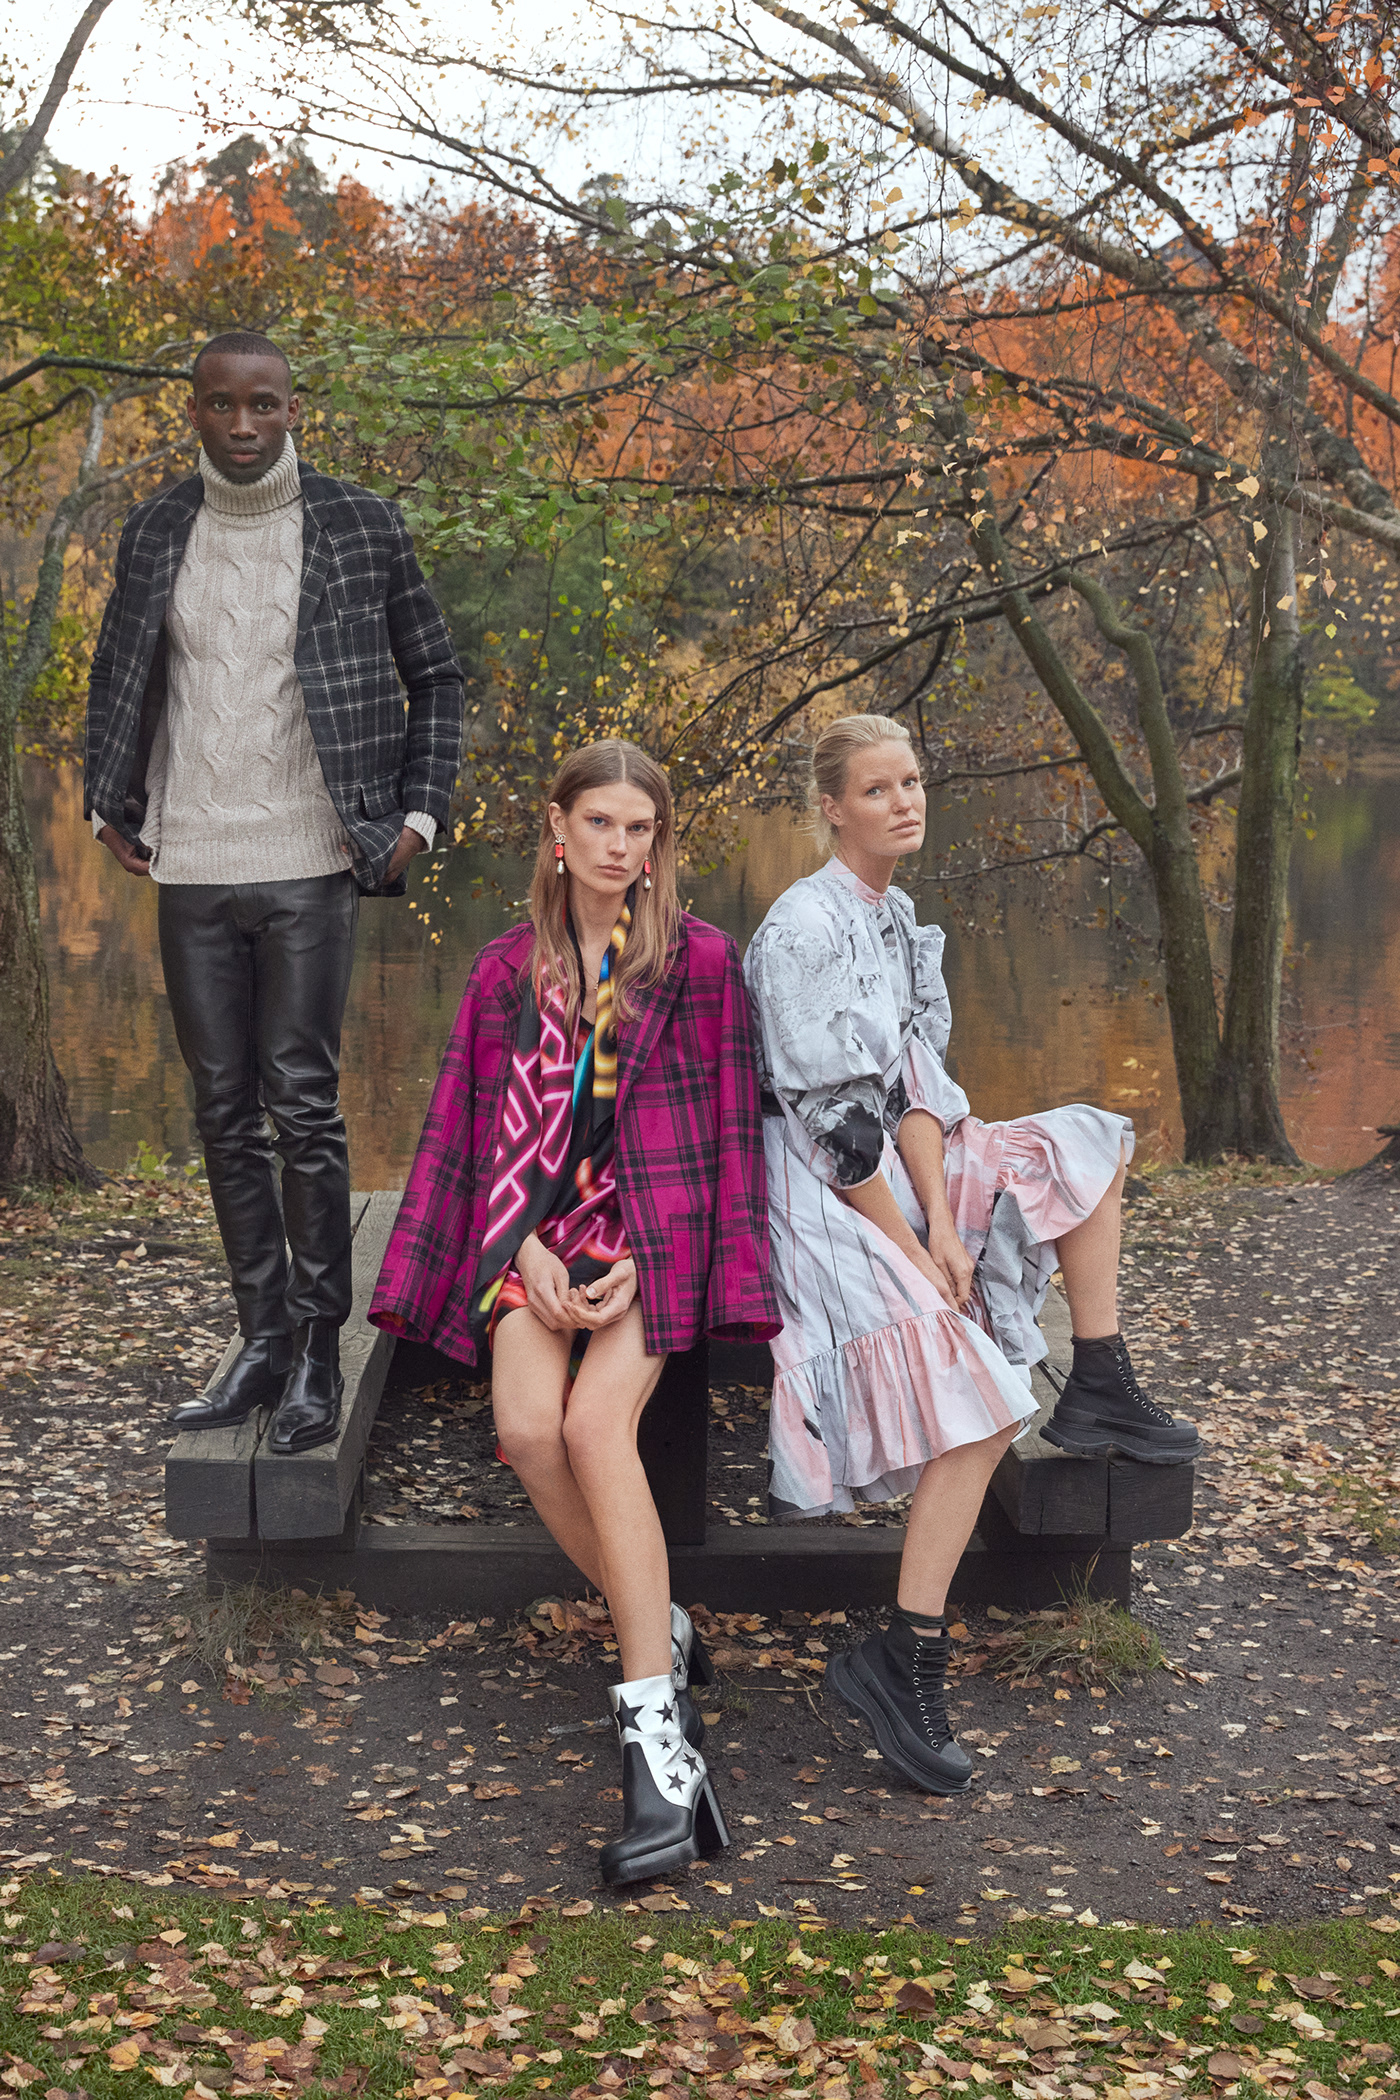 Diversity editorial Fashion  magazine models Outdoor postproduction retouch Scandinavian woods